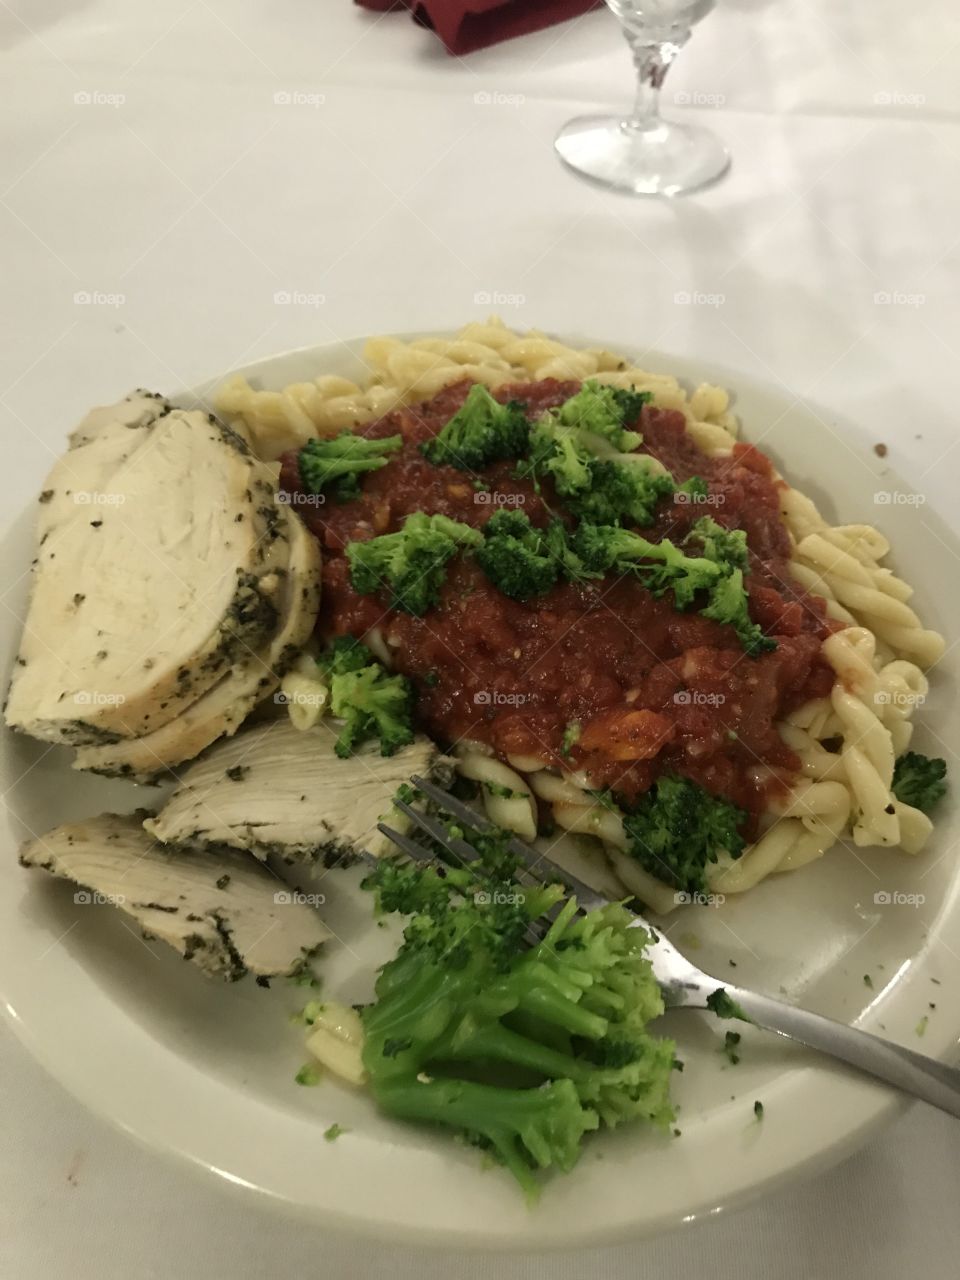 Amazing meal of pesto chicken over marinara pasta with broccoli 